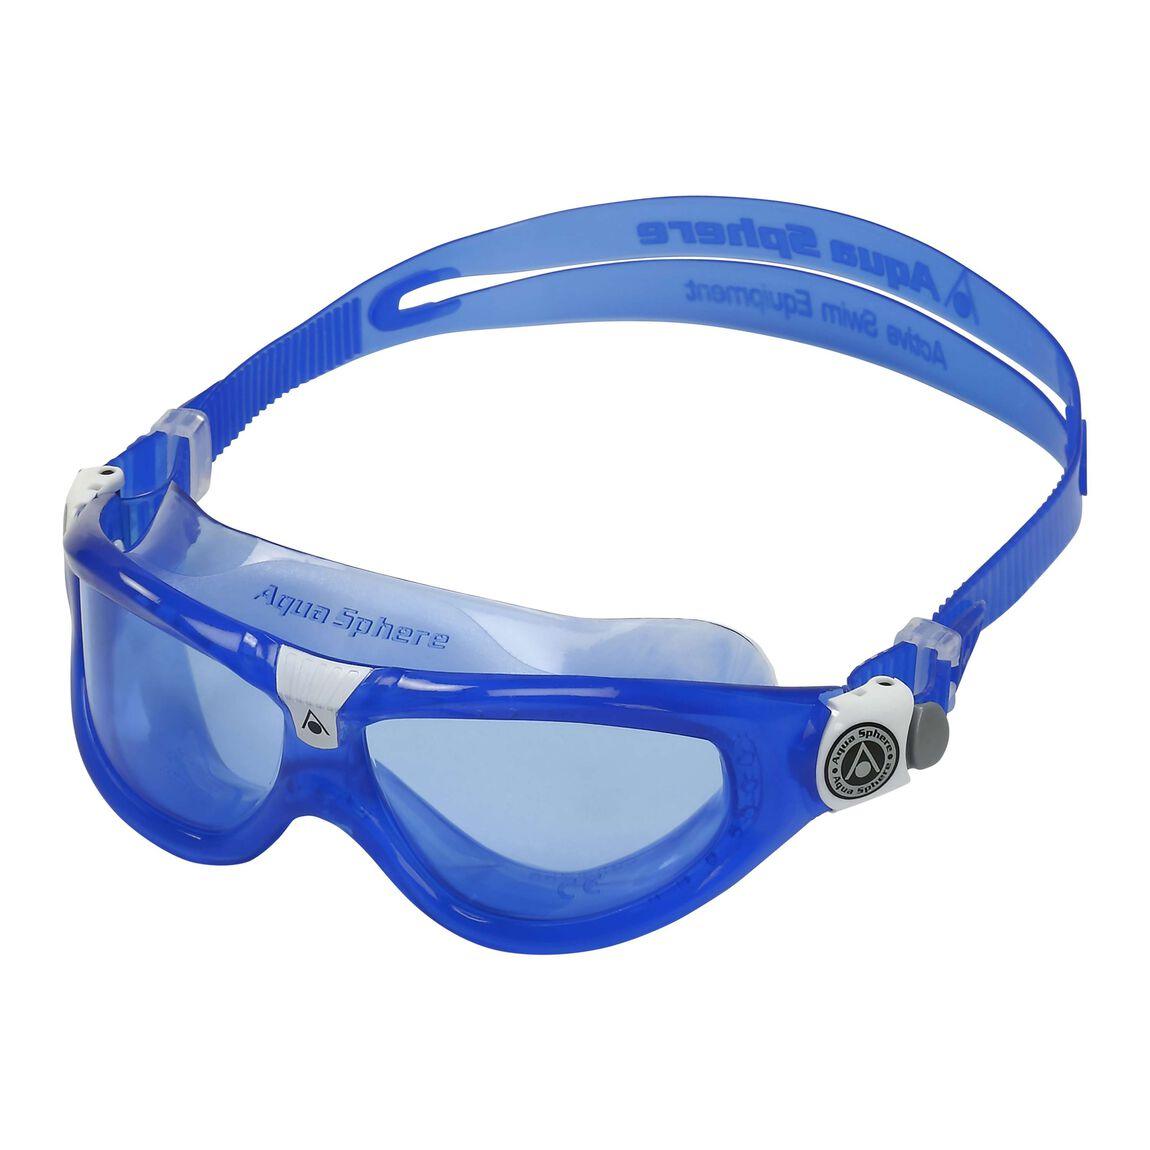 Aquasphere Seal Kid 2 Swim Mask